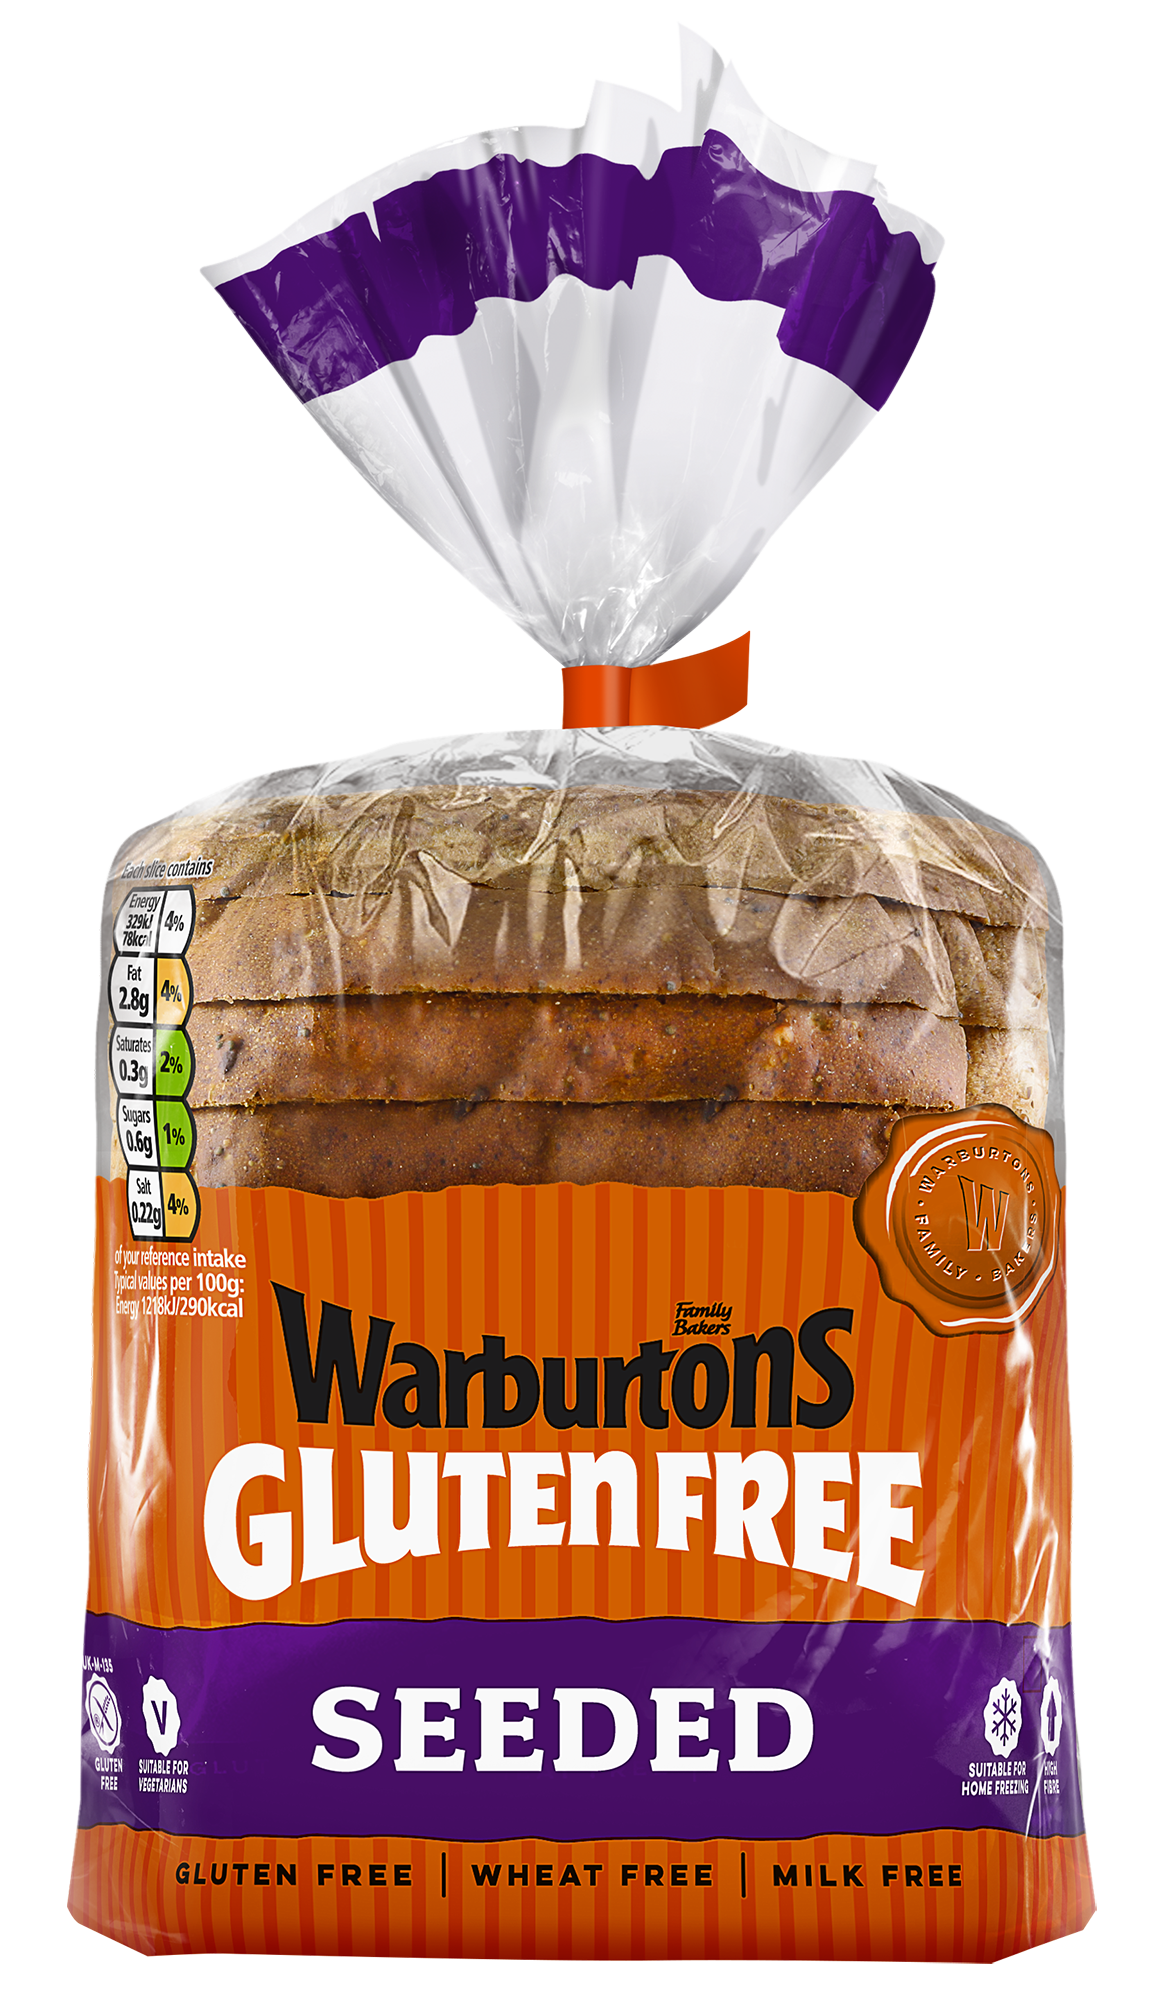 Warburtons Gluten Free Seeded Loaf